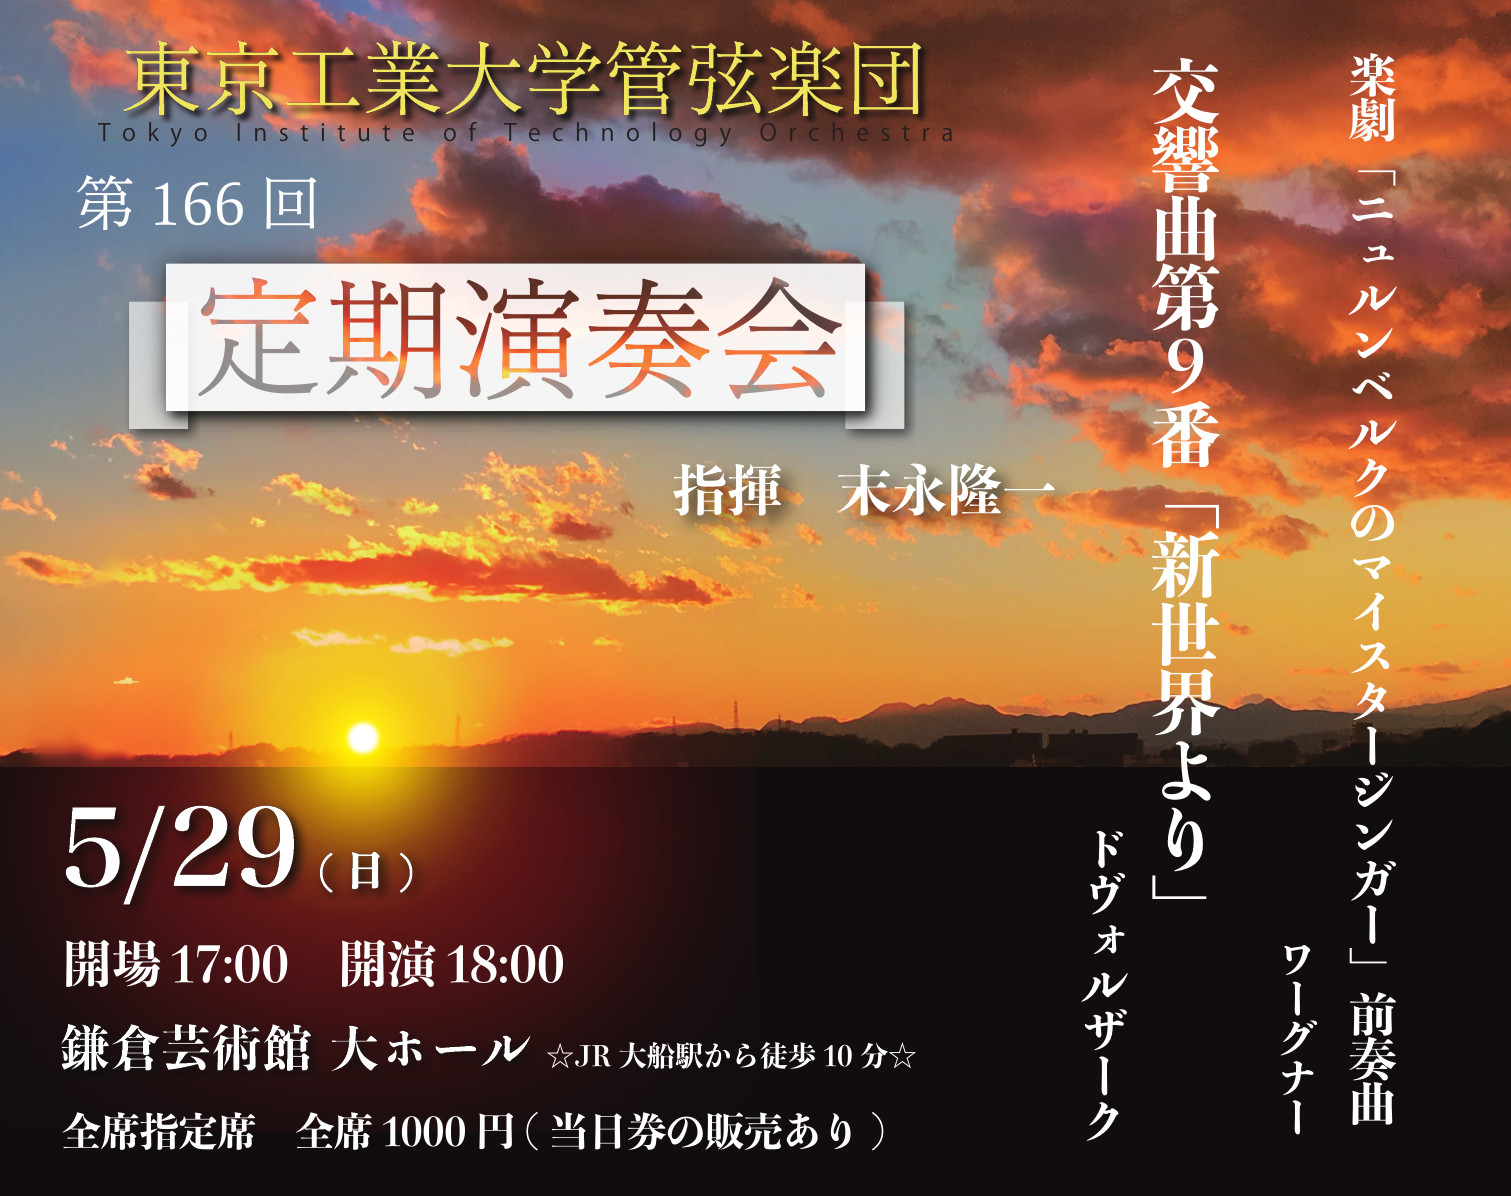 東京工業大学管弦楽団第166回定期演奏会のフライヤー画像